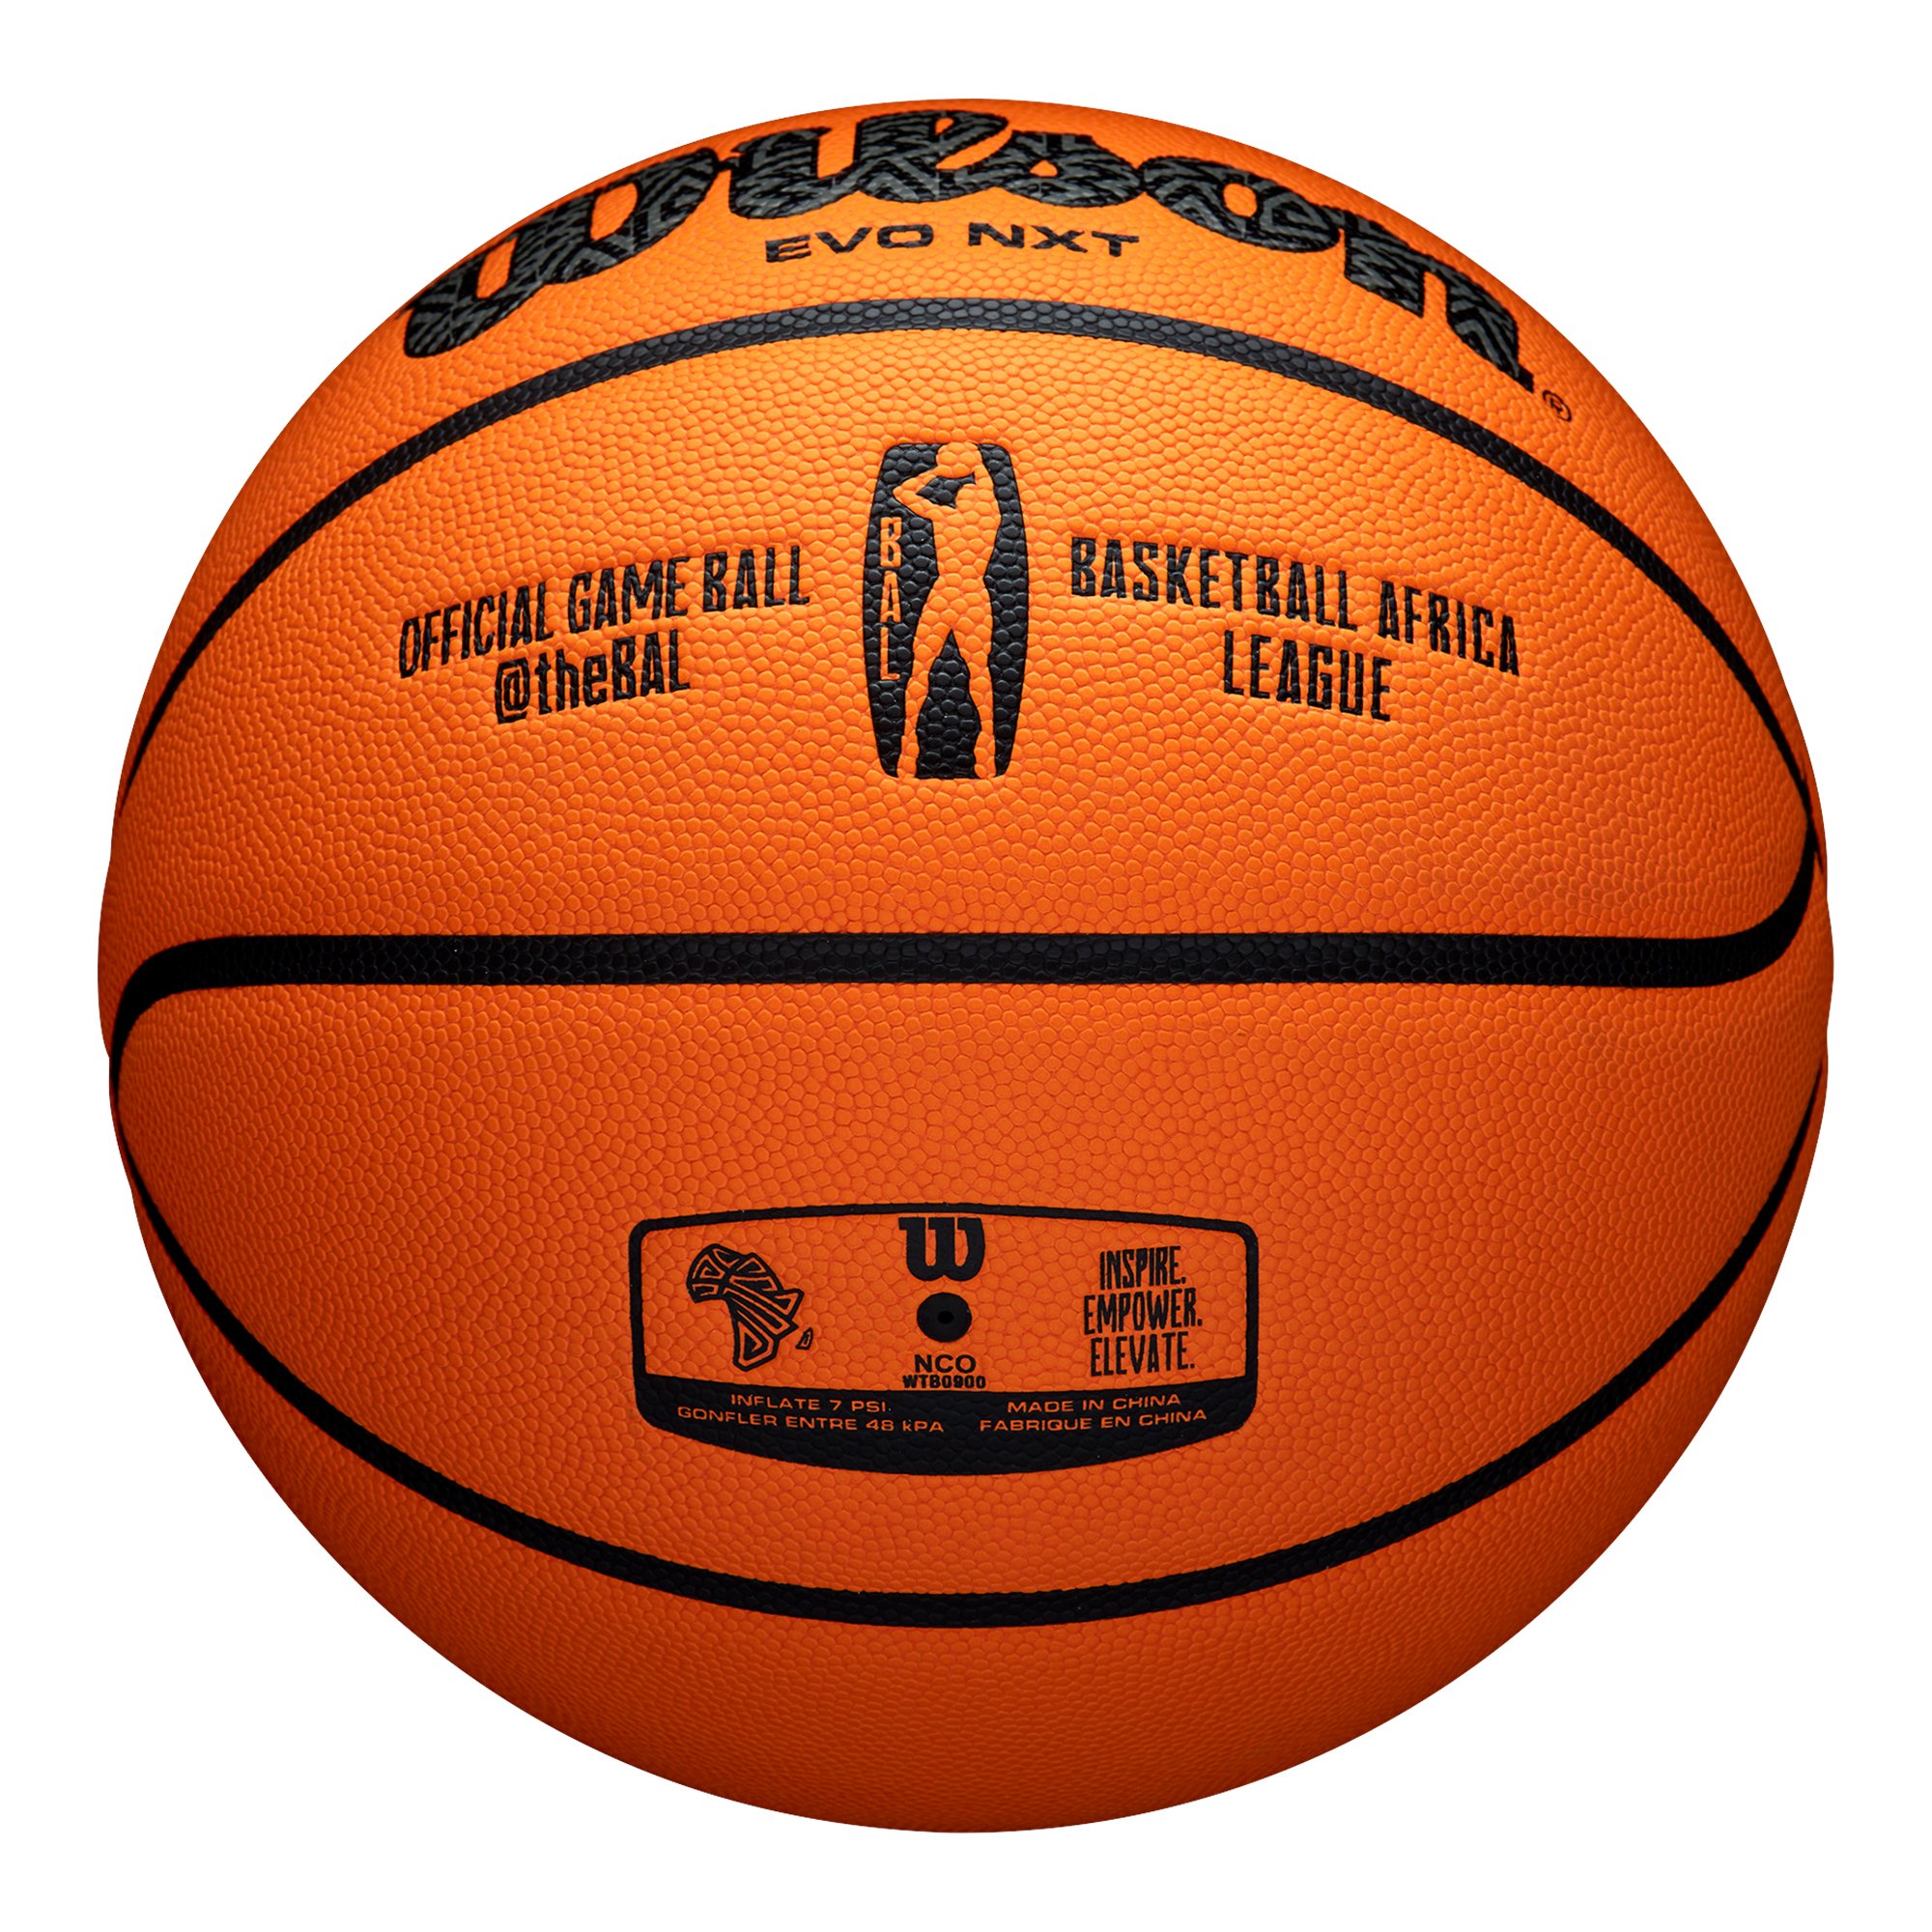 Wilson Evo Nxt Basketball Africa League